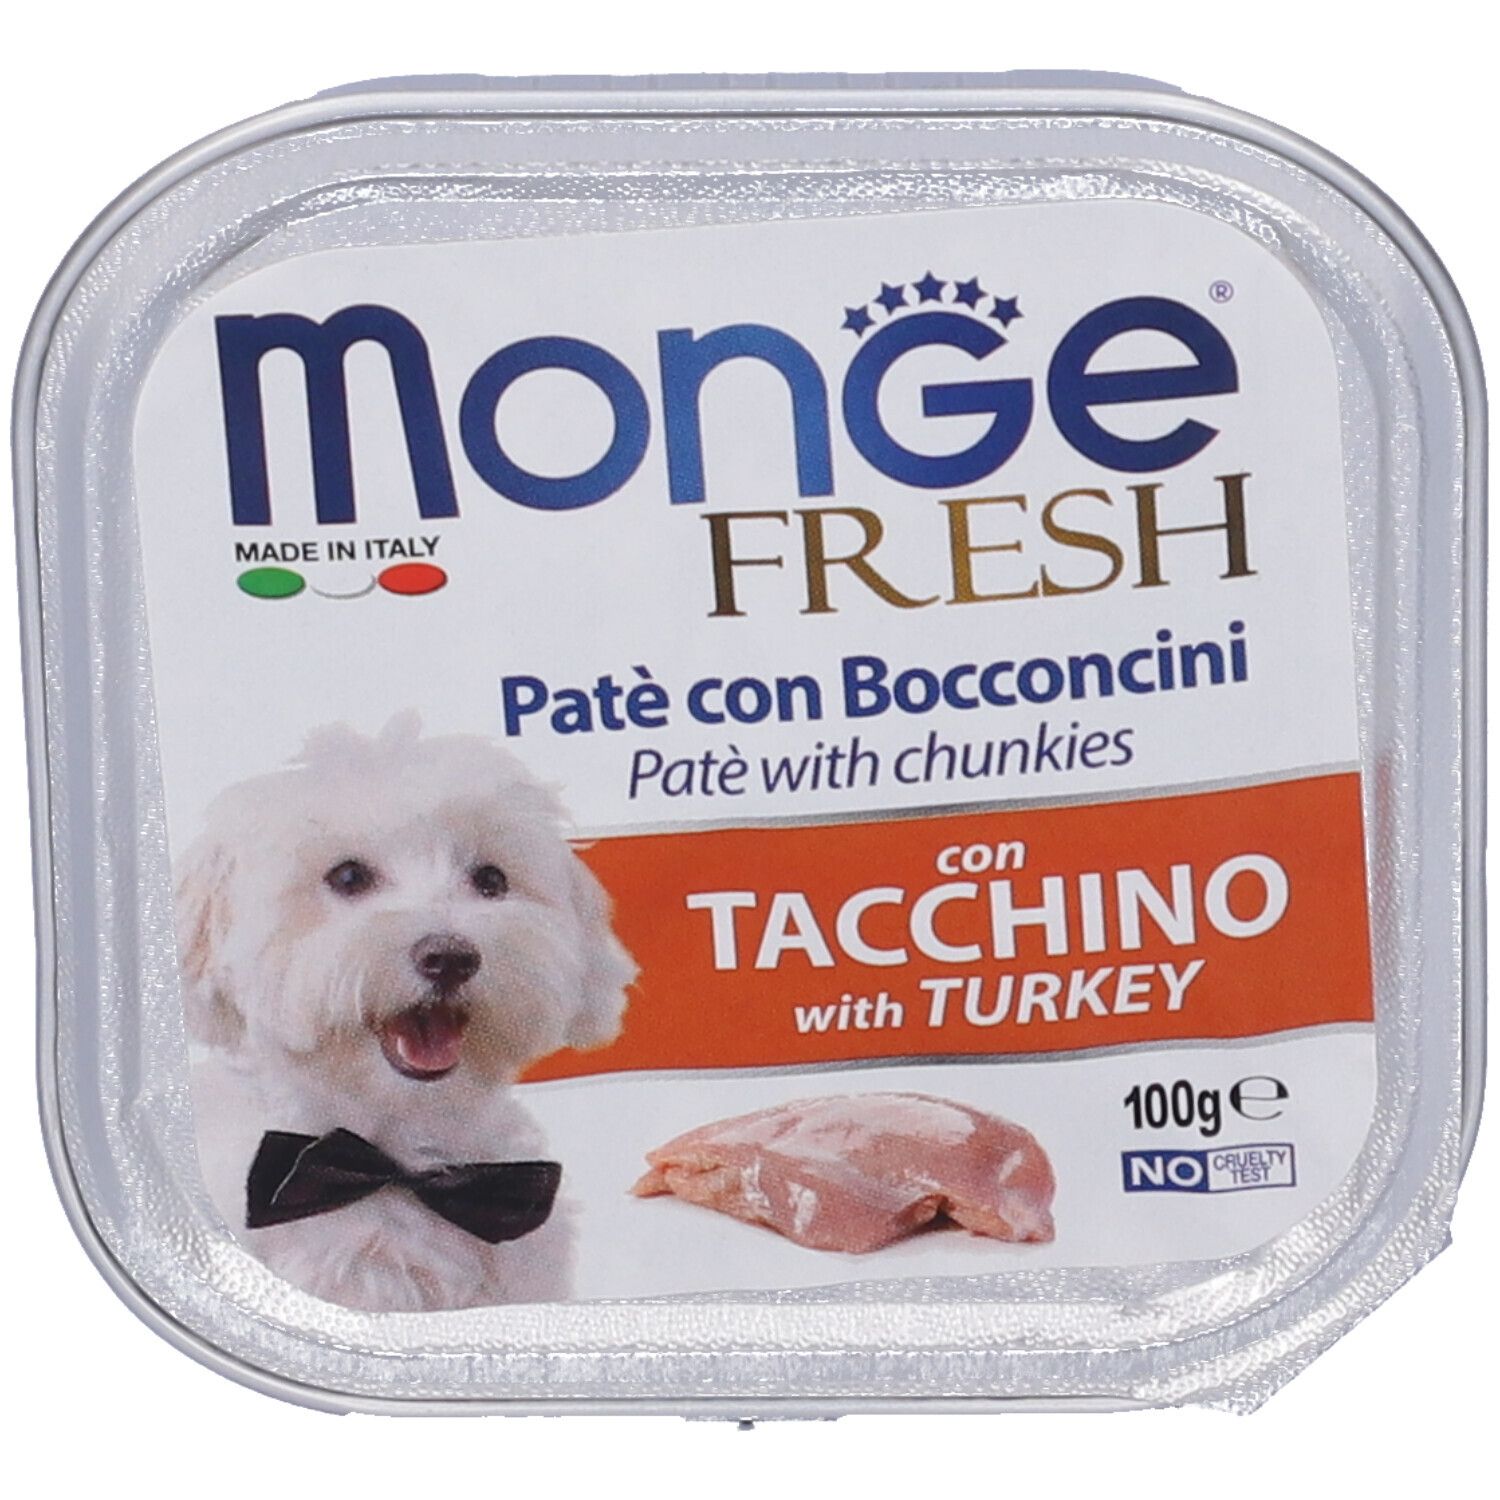 Image of Monge Fresh Tacchino Paté Con Bocconcini